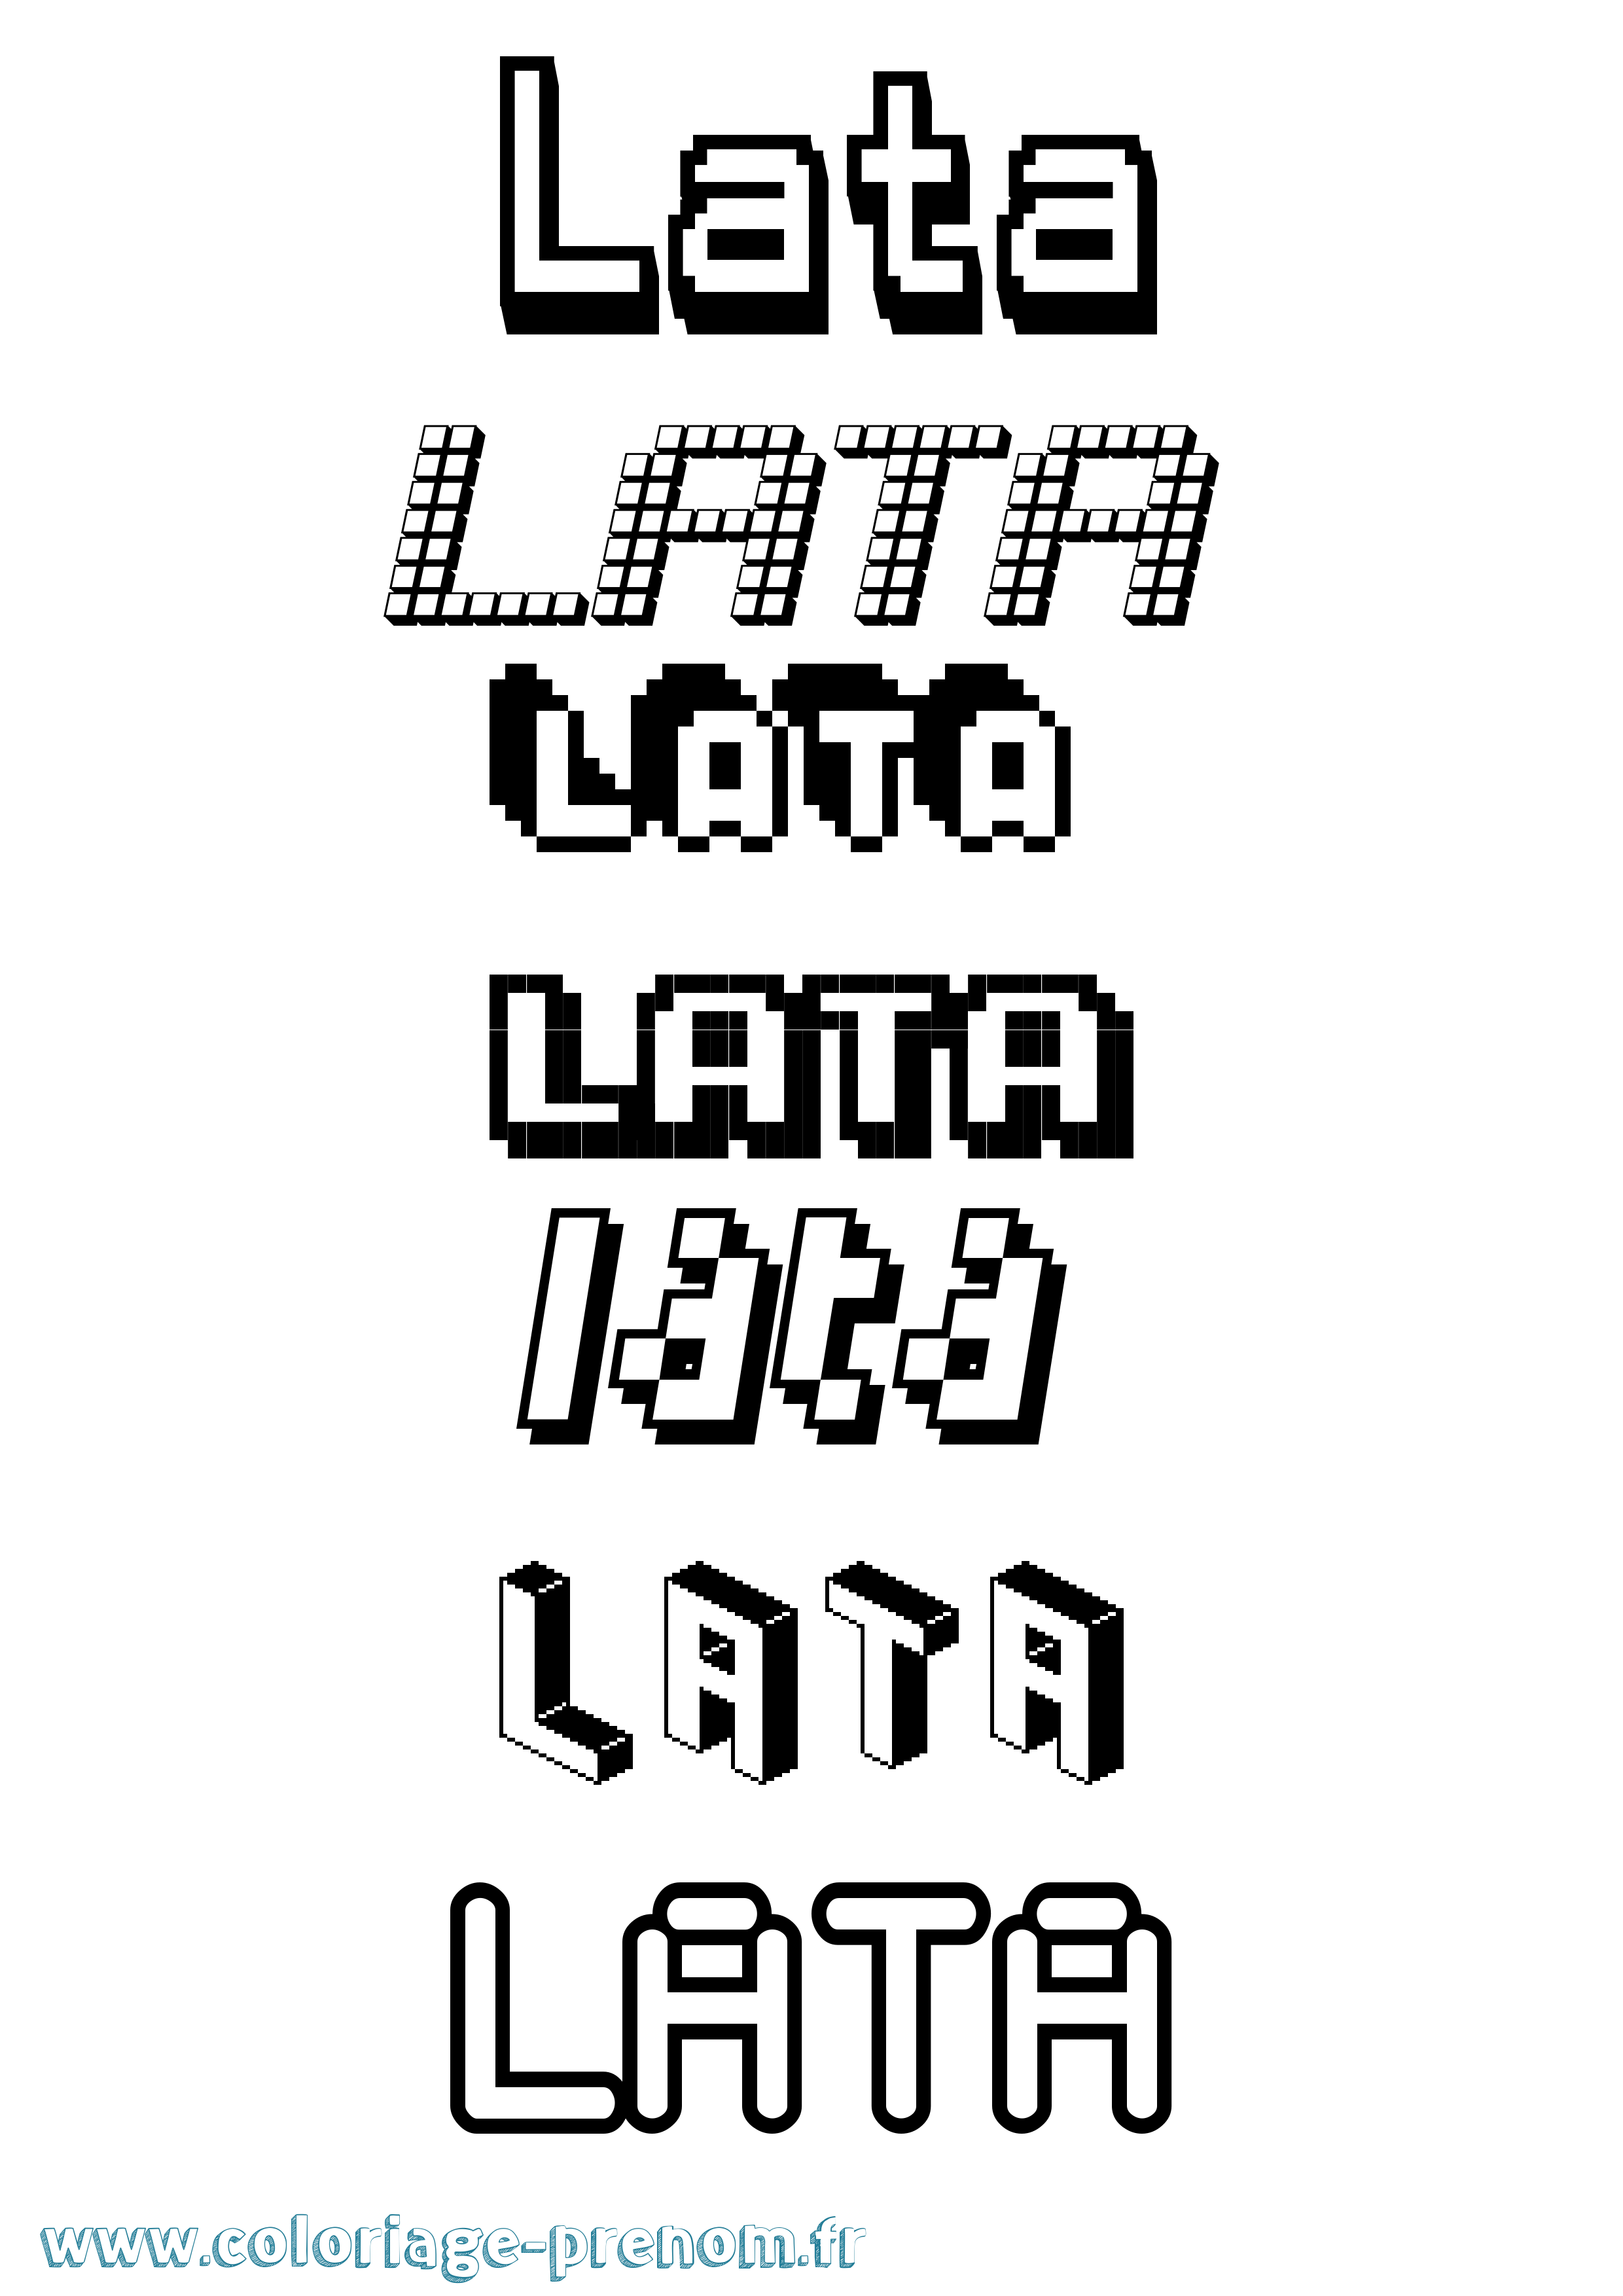 Coloriage prénom Lata Pixel